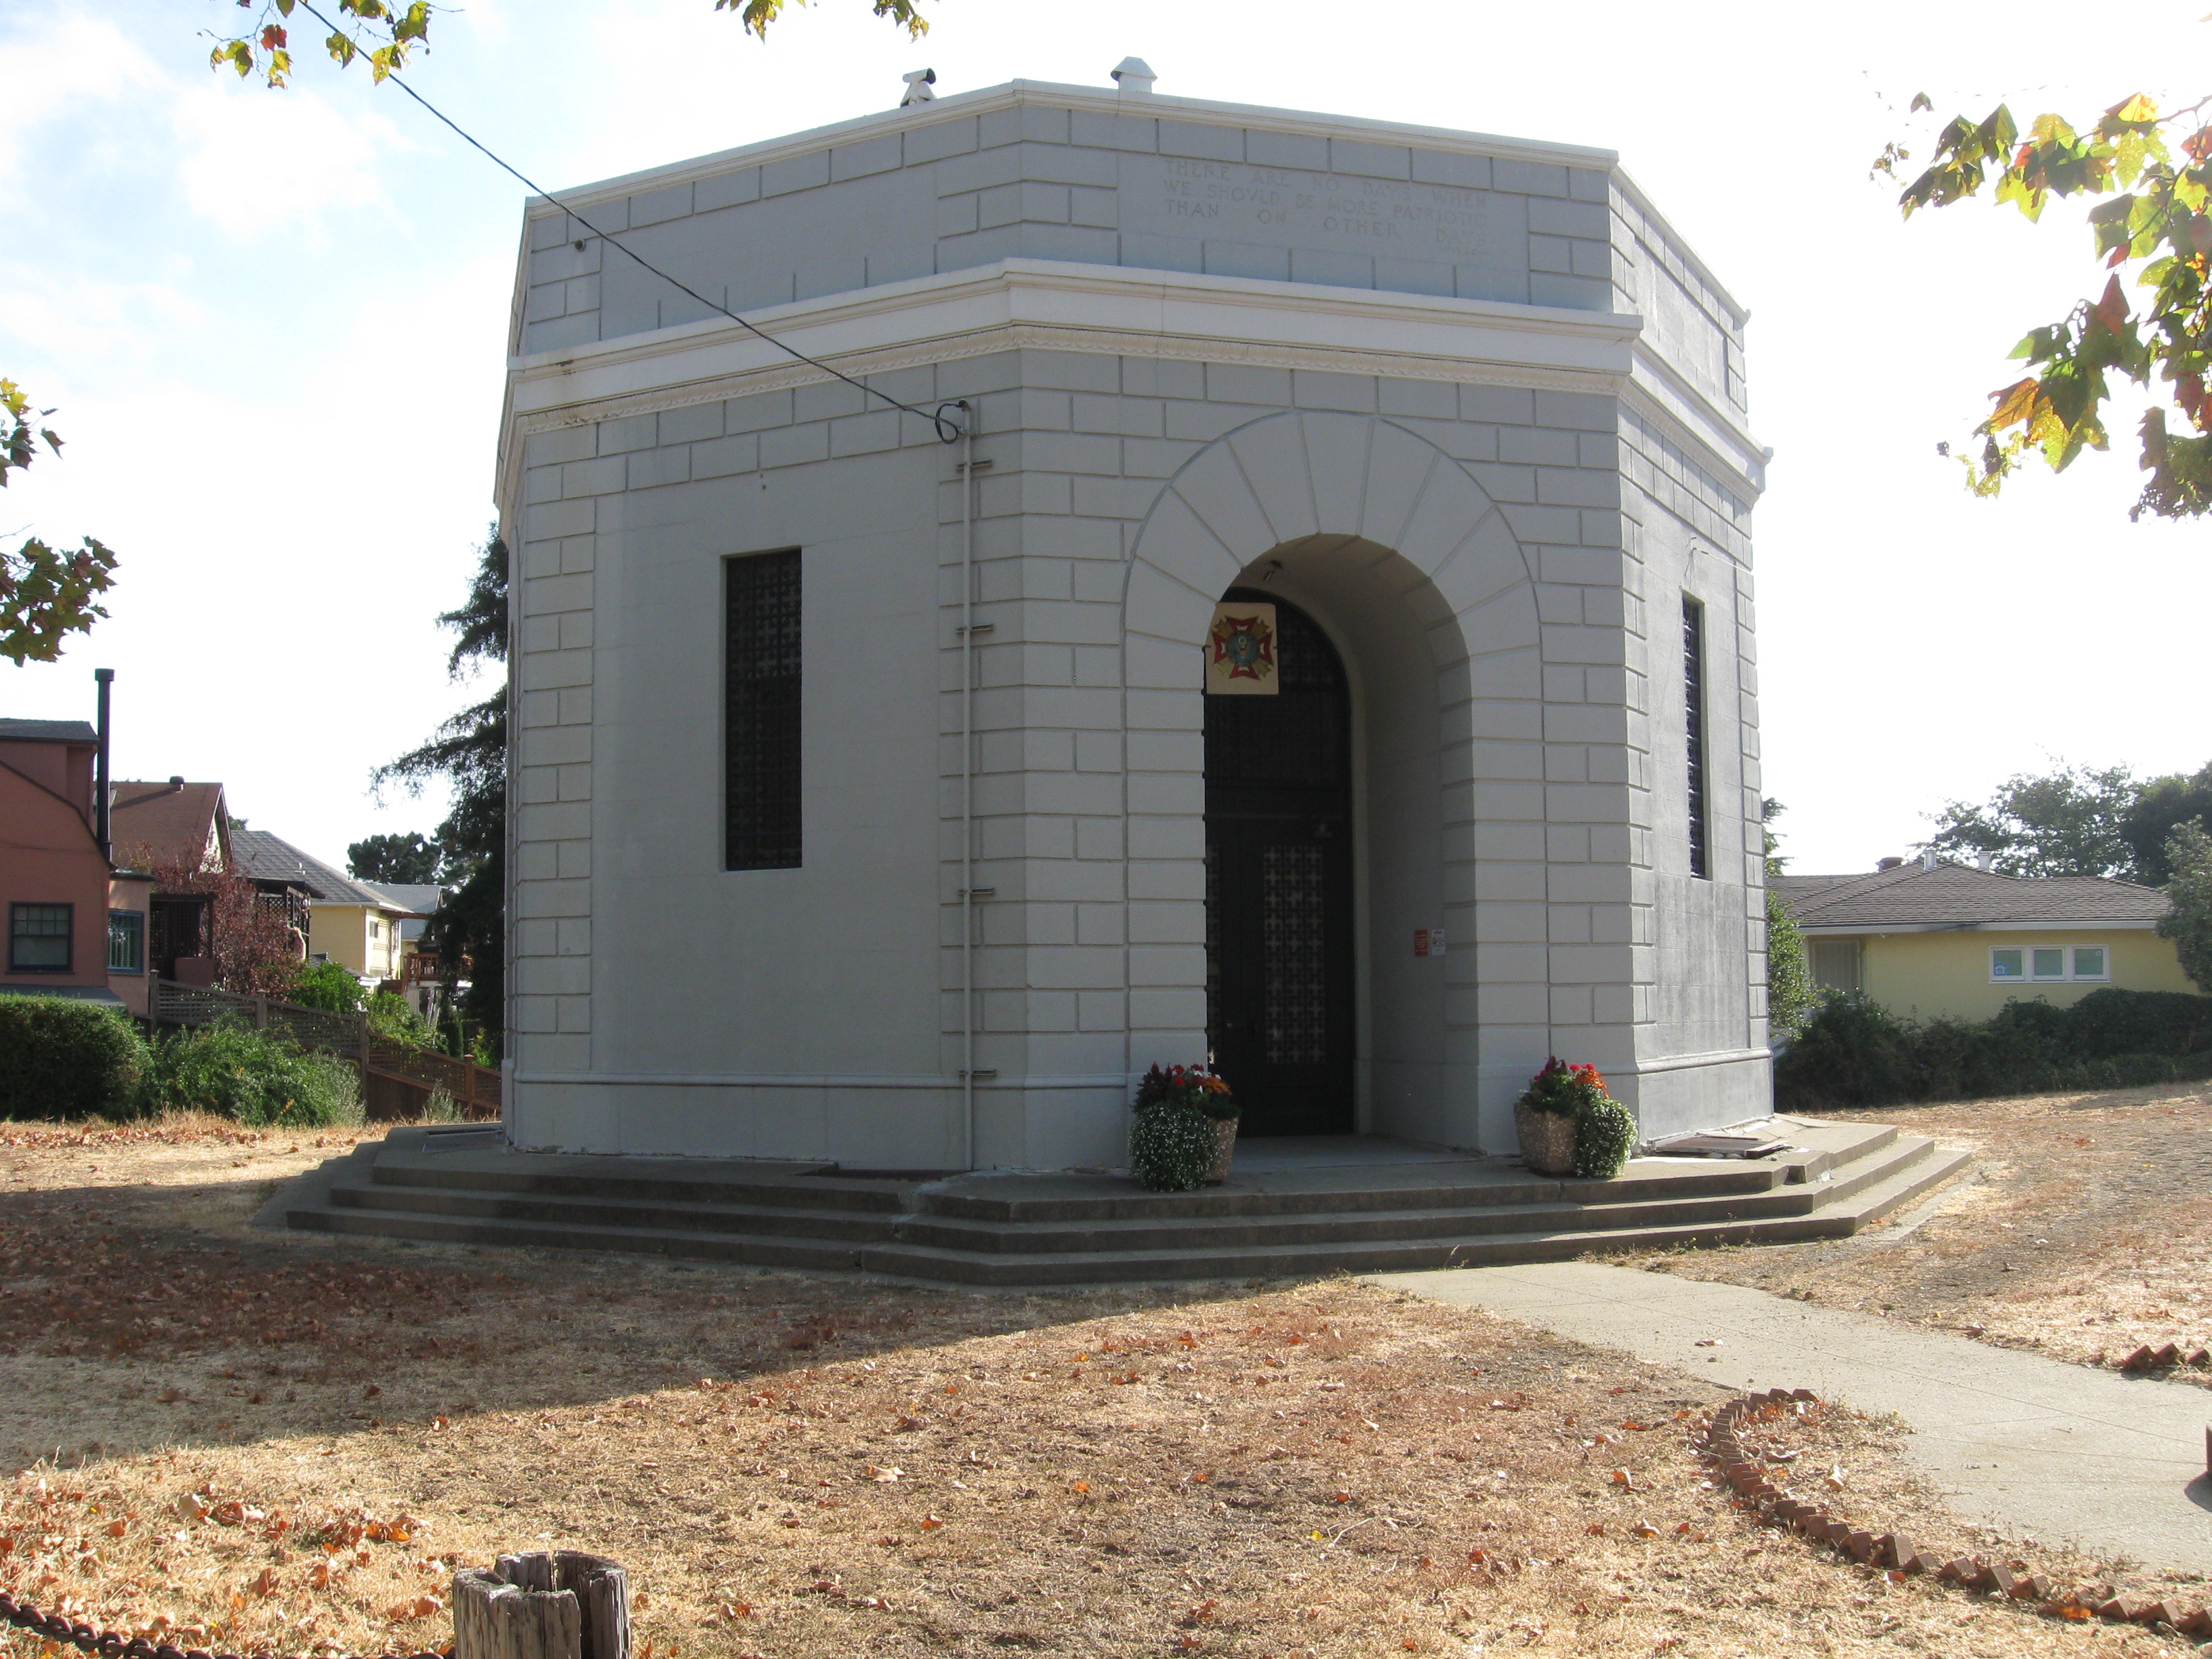 File:Memorial Hall Crockett CA.JPG - Wikimedia Commons